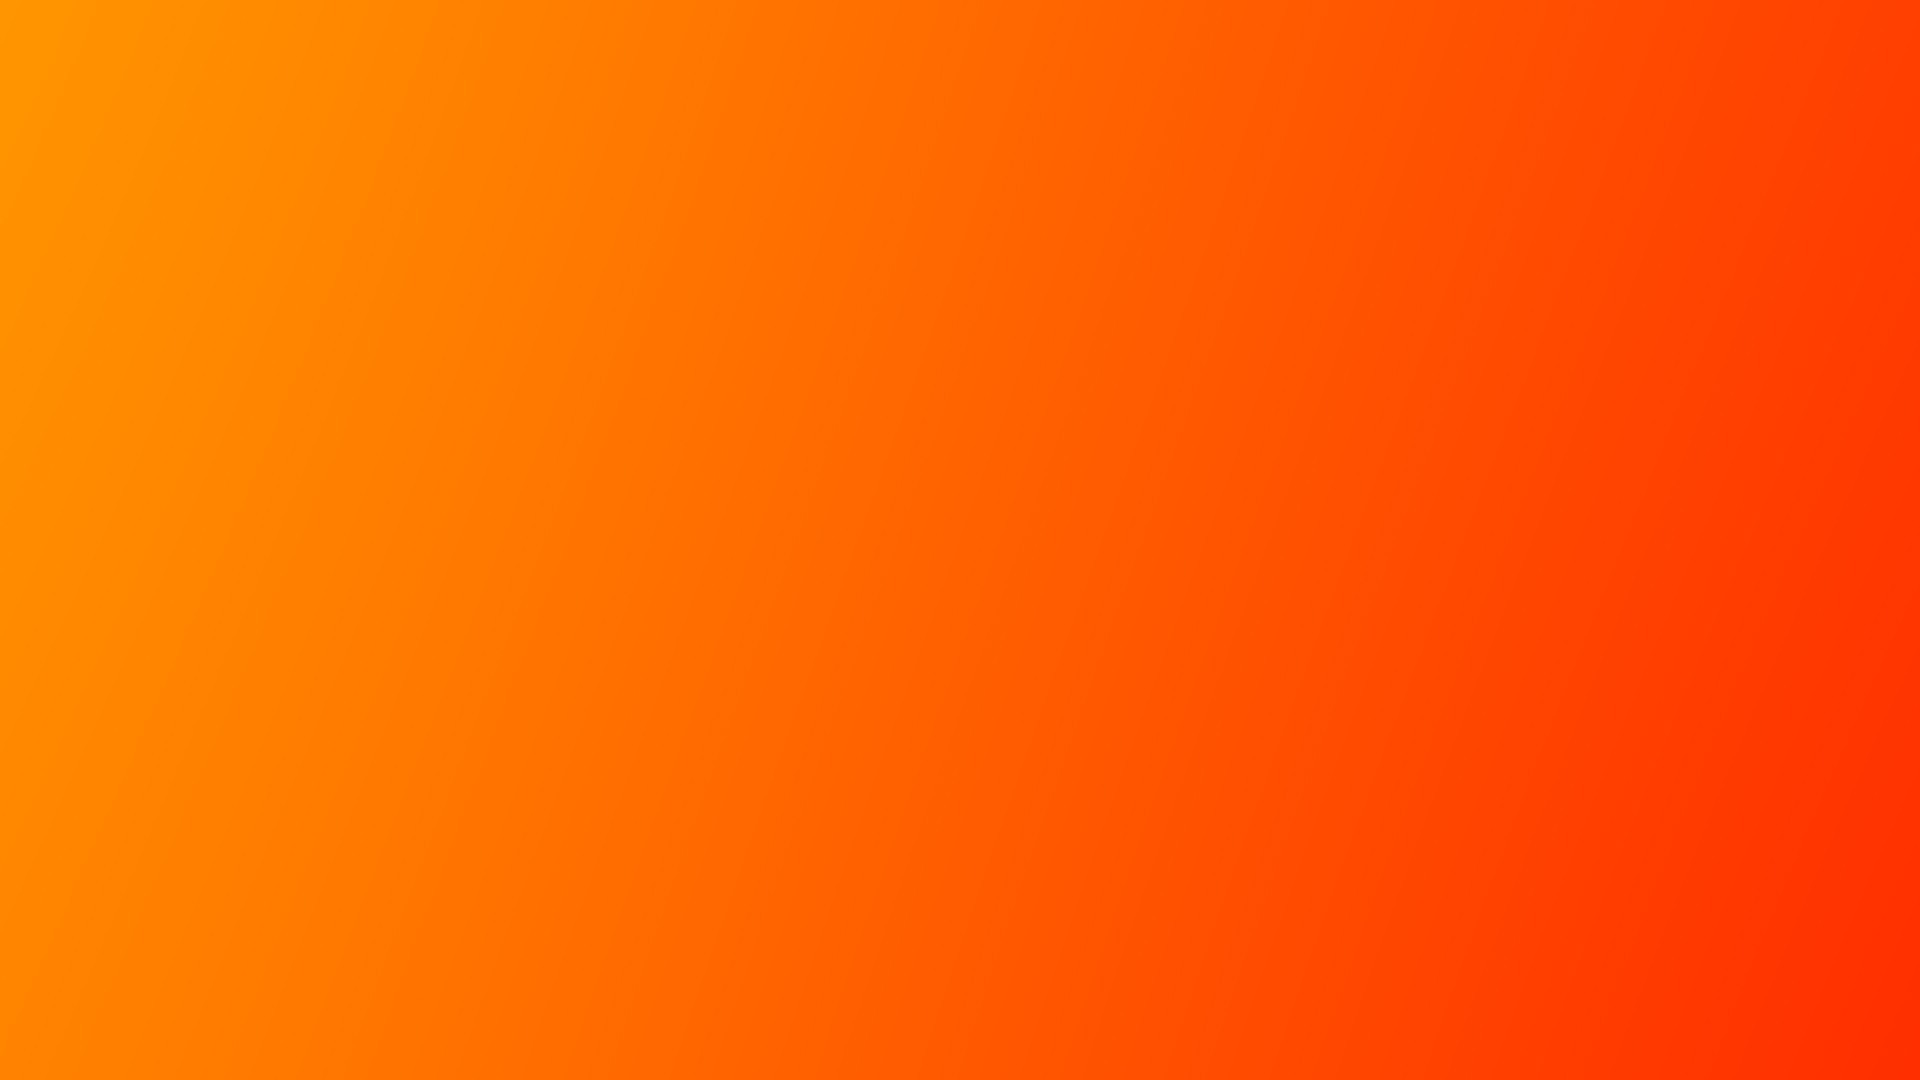 Orange Gradient Background Wallpaper And Image